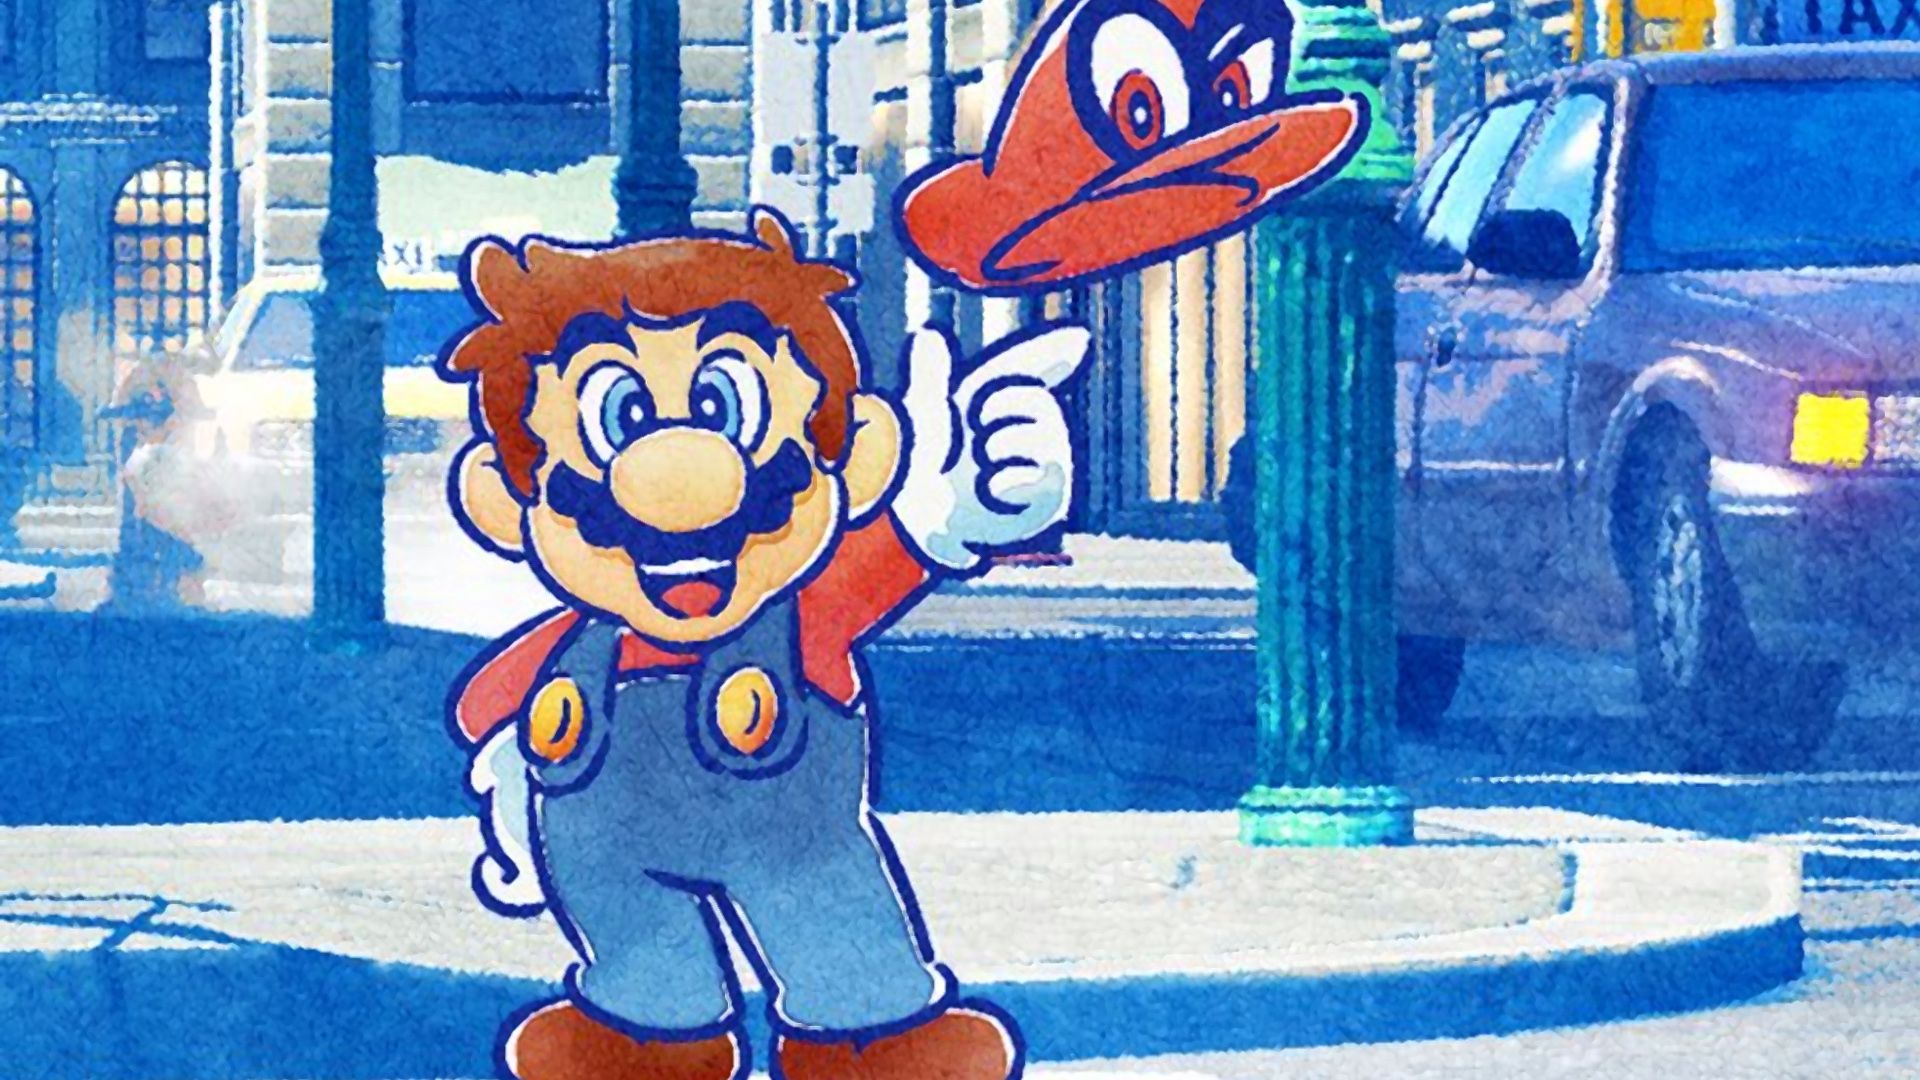 New Super Mario Odyssey wallpaper shows some stylish new art